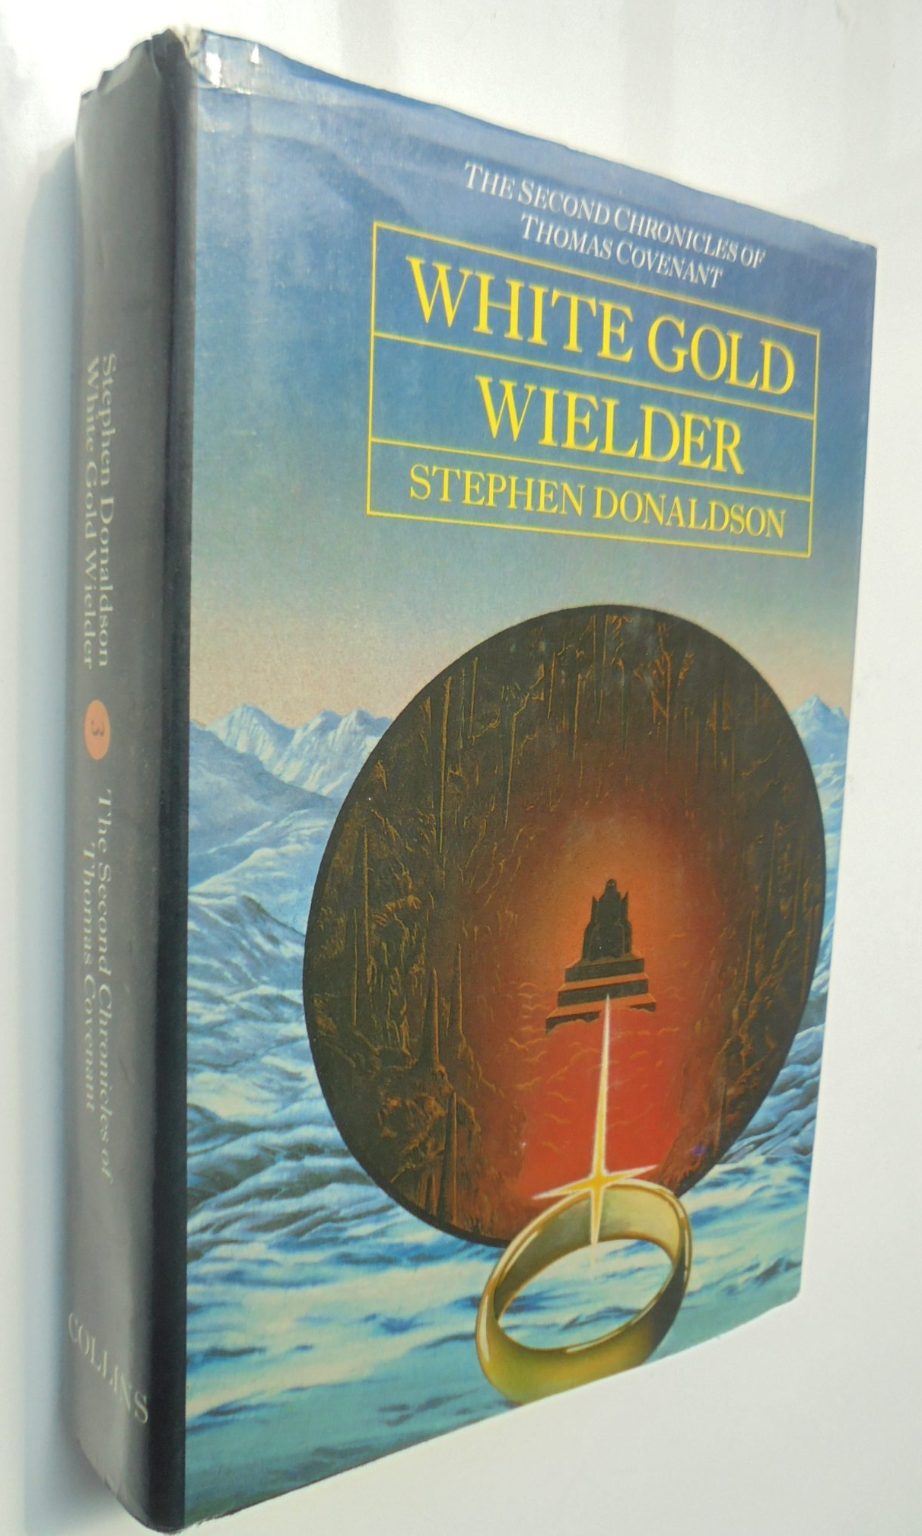 White Gold Wielder. First Edition. By Stephen Donaldson